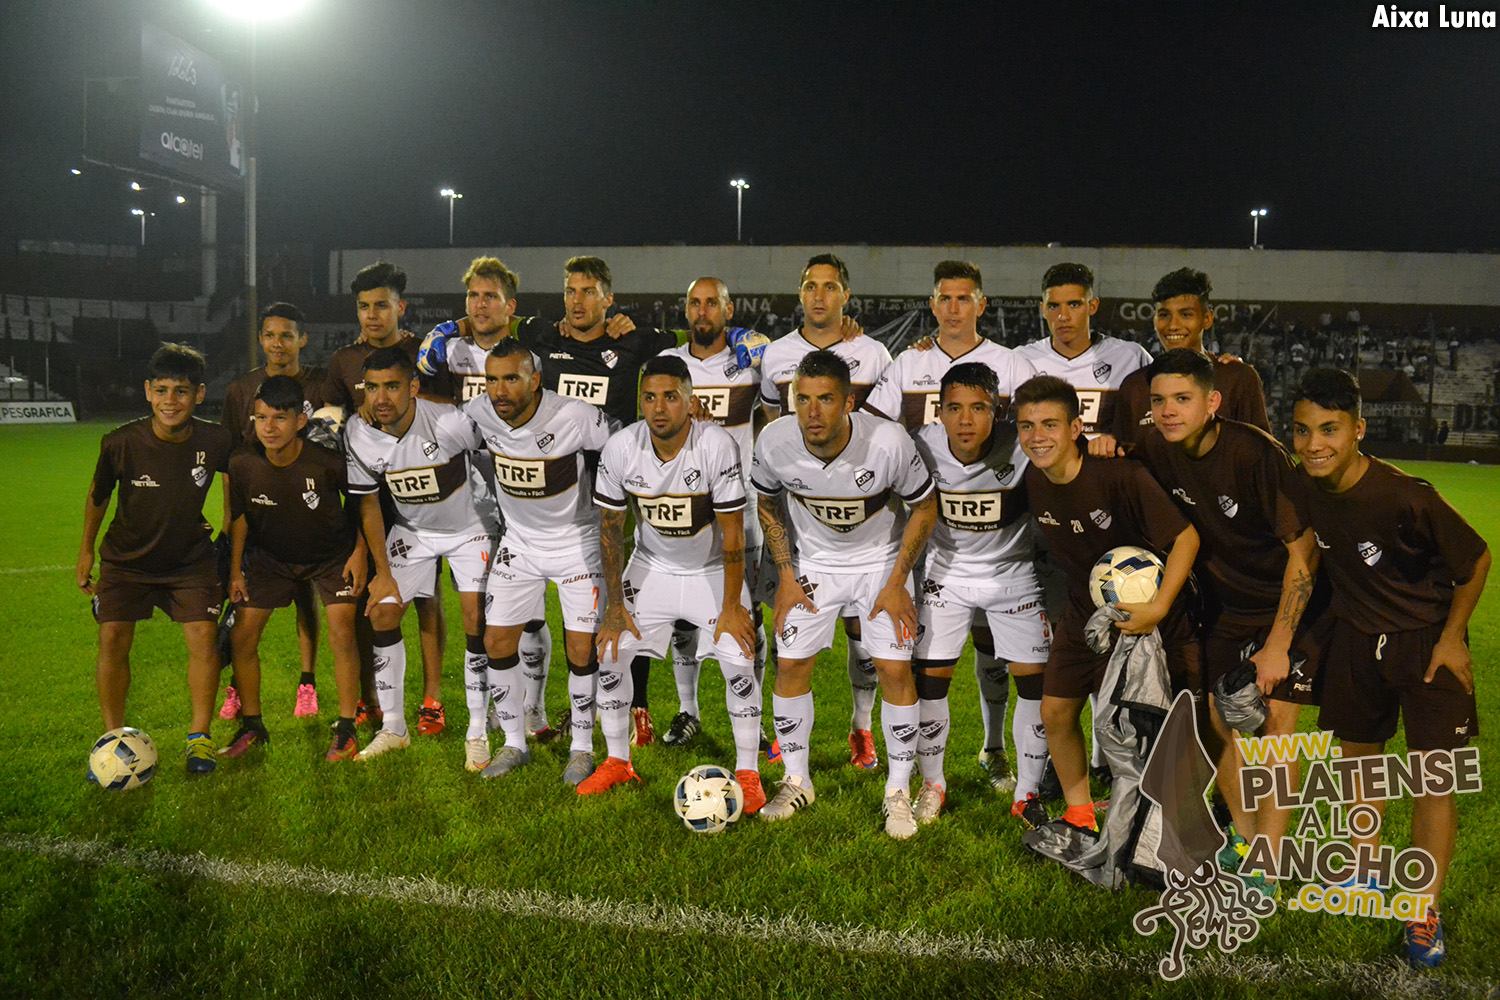 Equipo Platense 2016-17